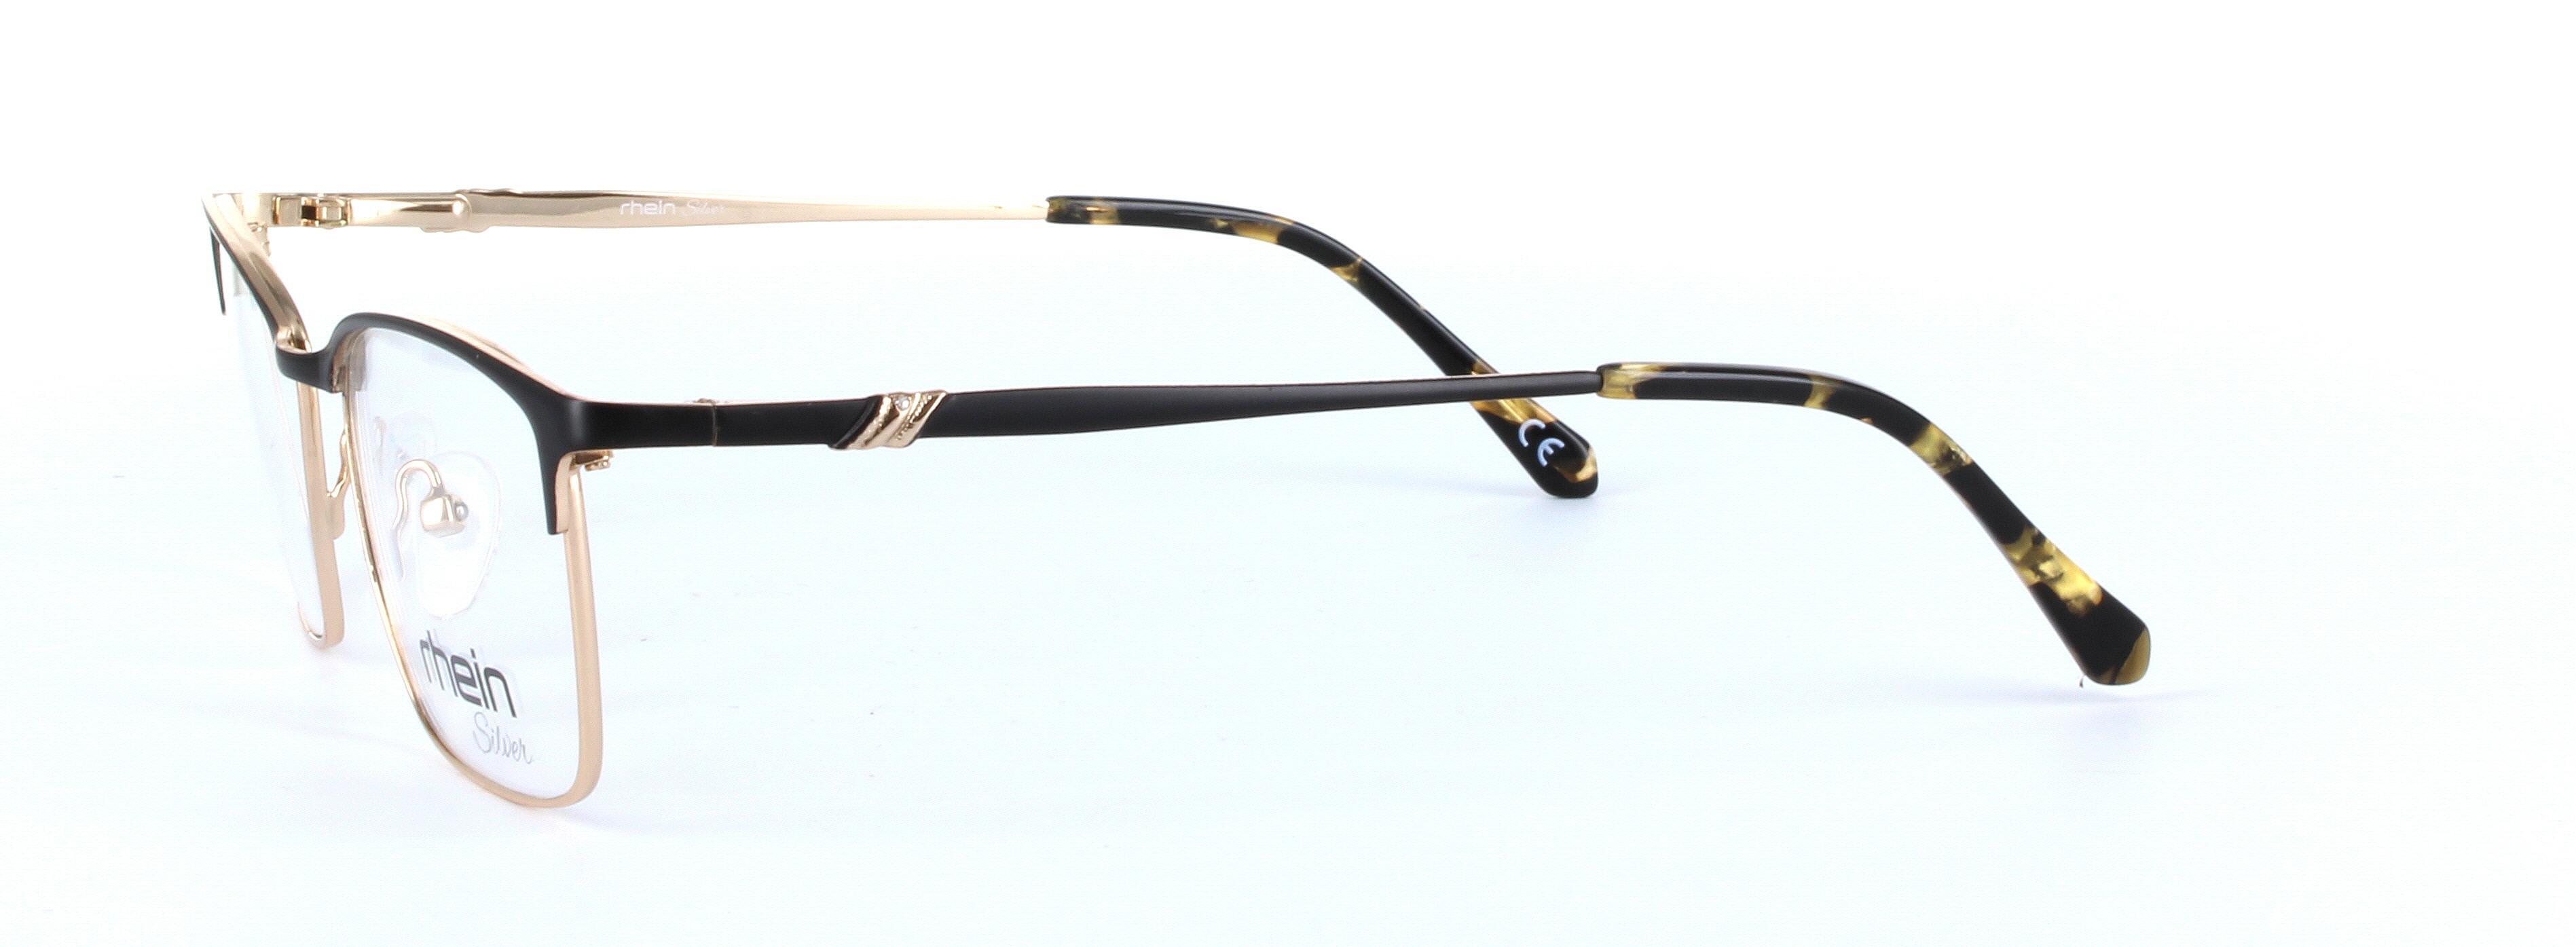 Gabriella Black Full Rim Oval Round Metal Glasses - Image View 2